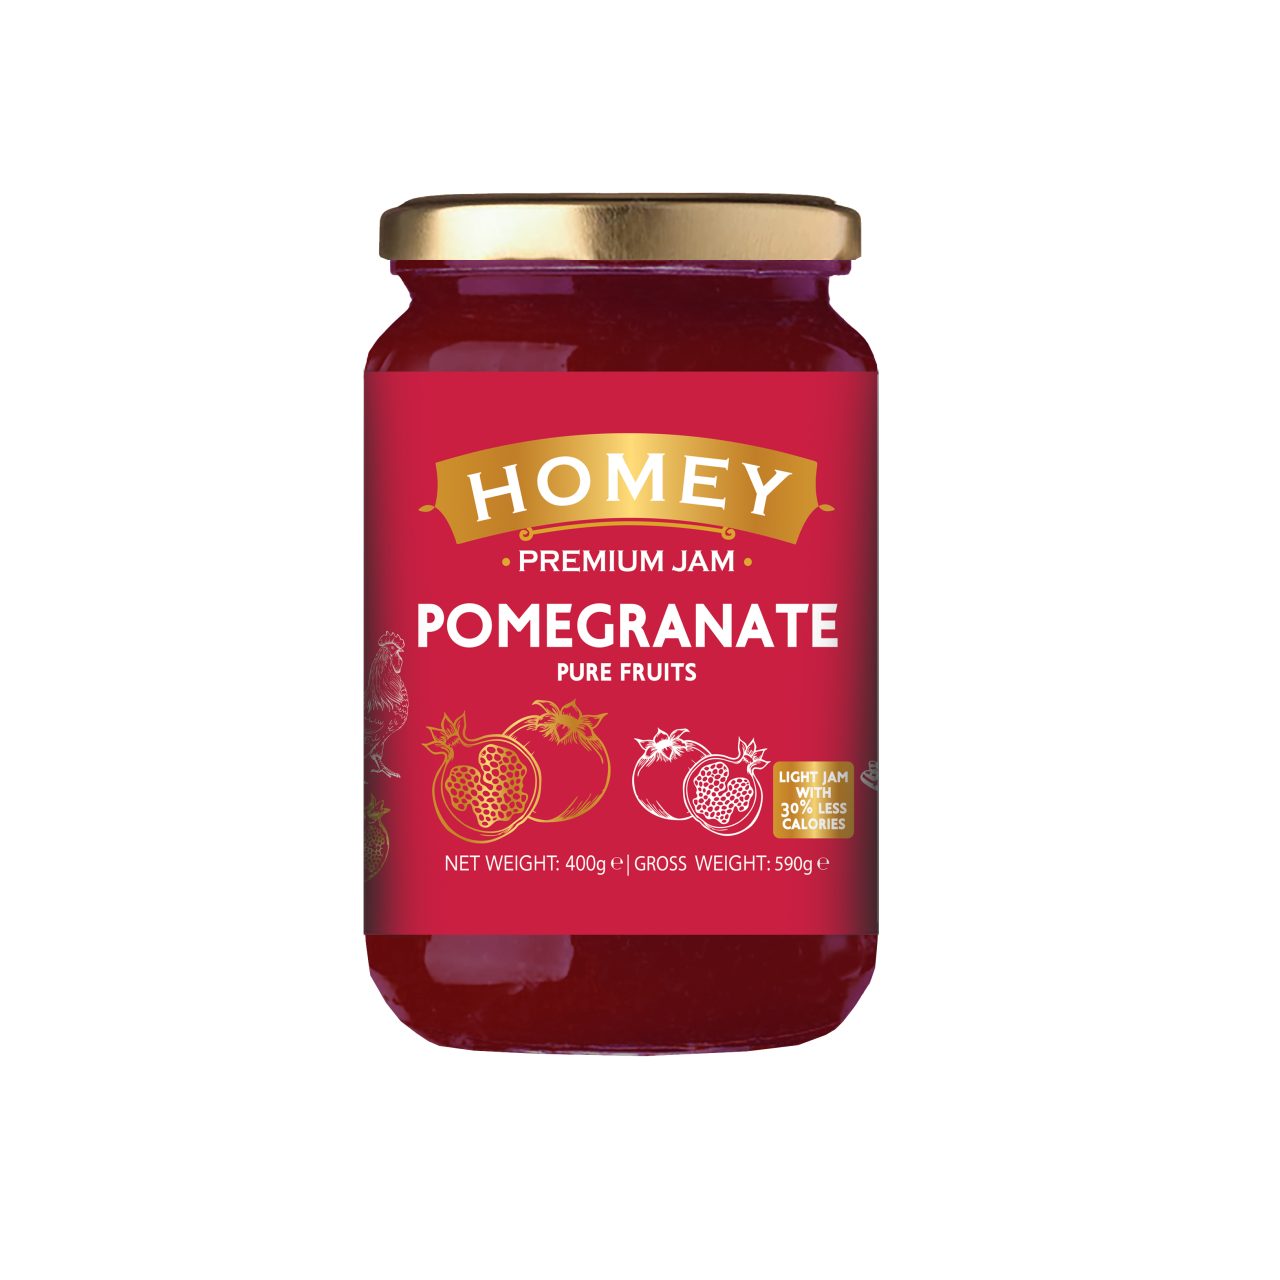 HOMEY Marmelade Pomegranate - Amhes Pharma - Παραγωγη καλλυντικων